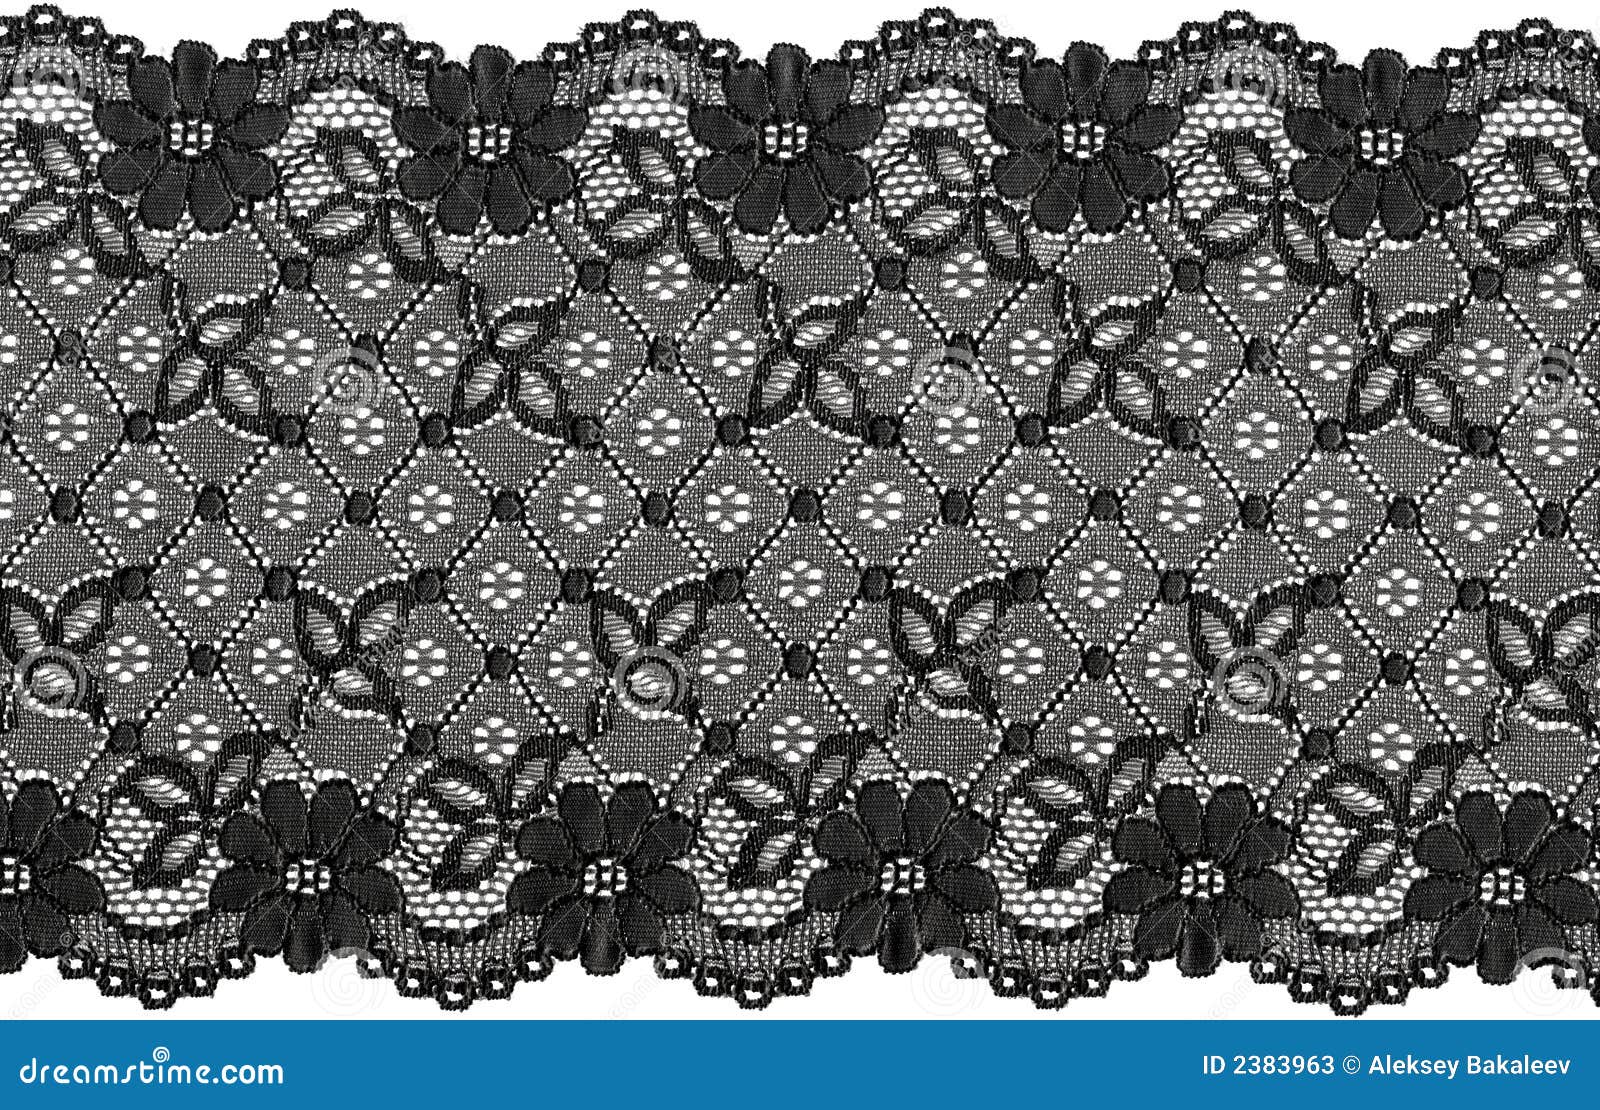 Black lace stock image. 